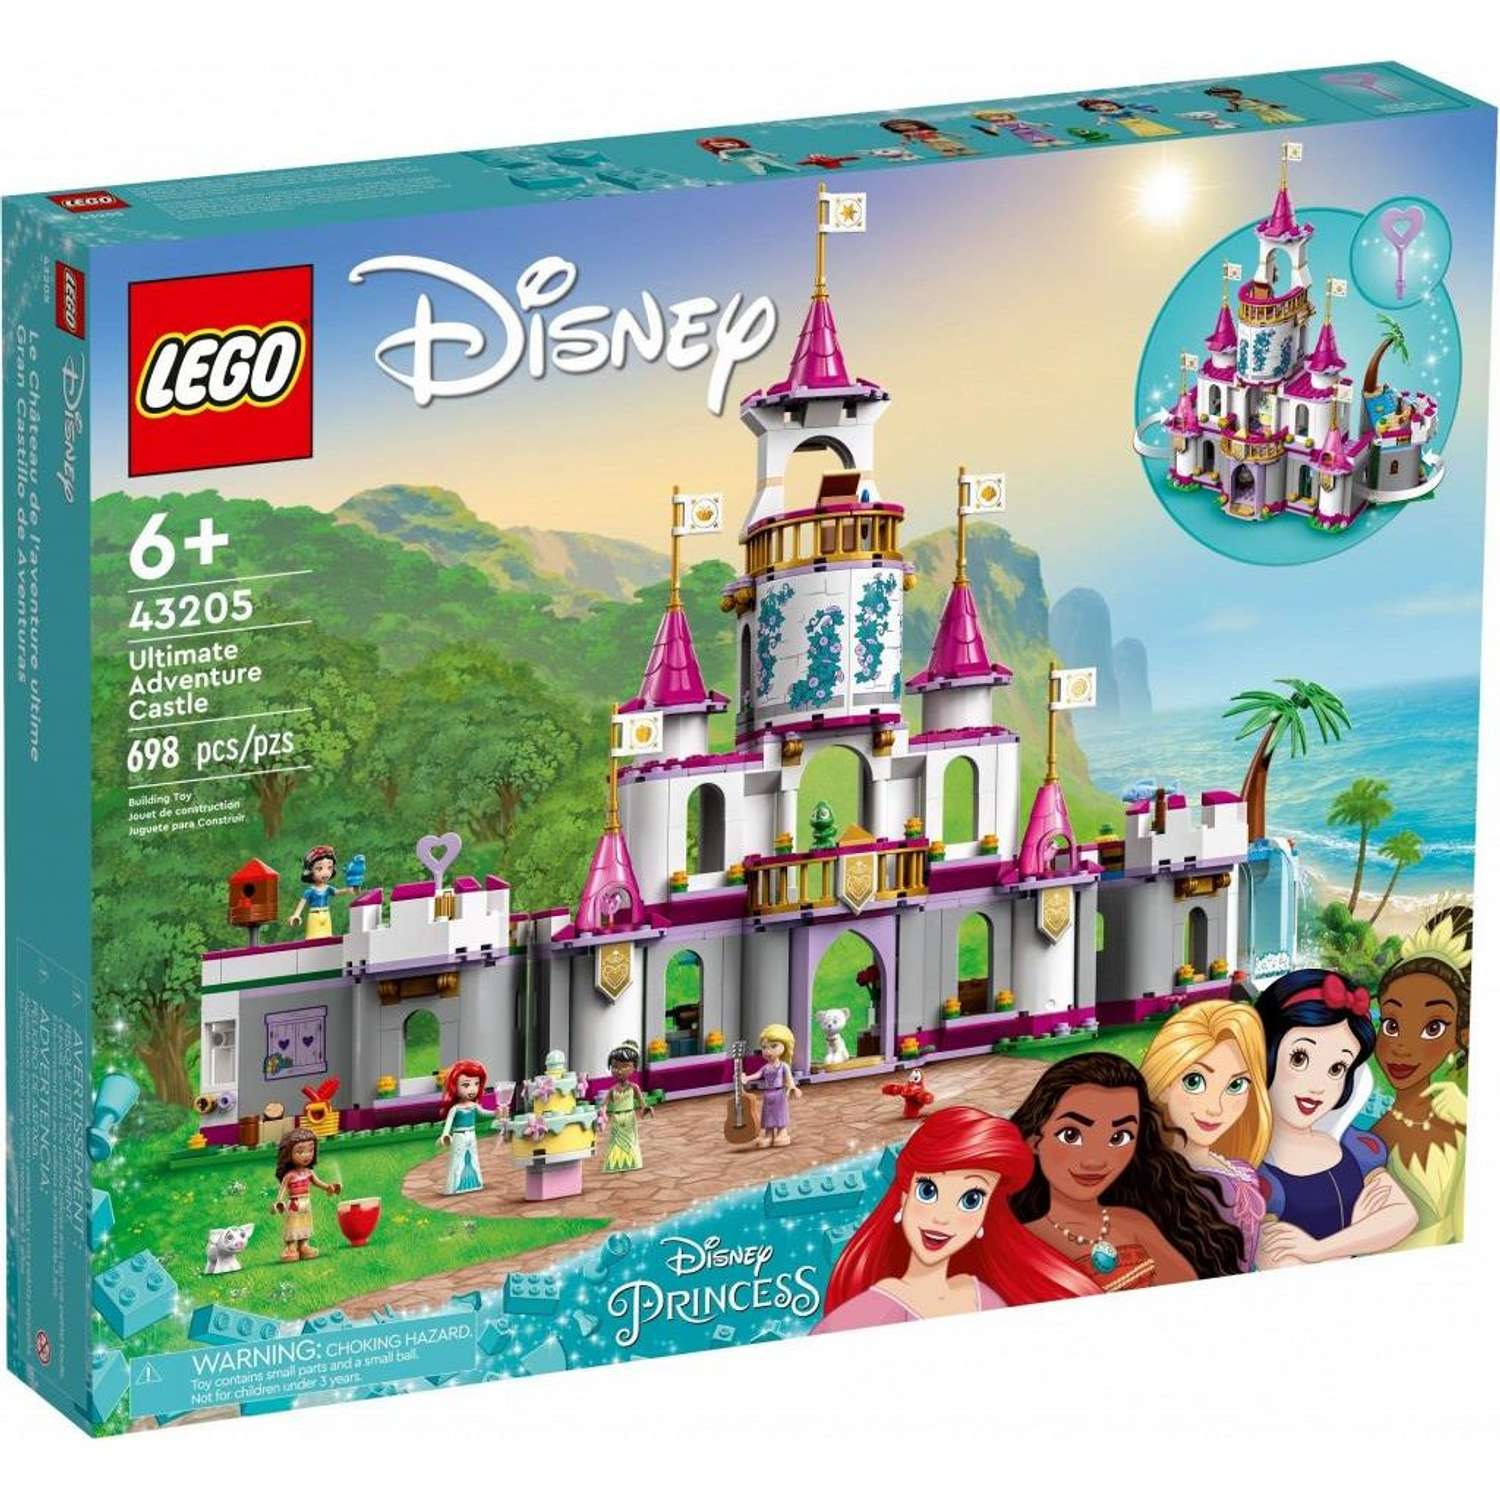 Конструктор LEGO Princesses Ultimate Adventure Castle 43205 - фото 1